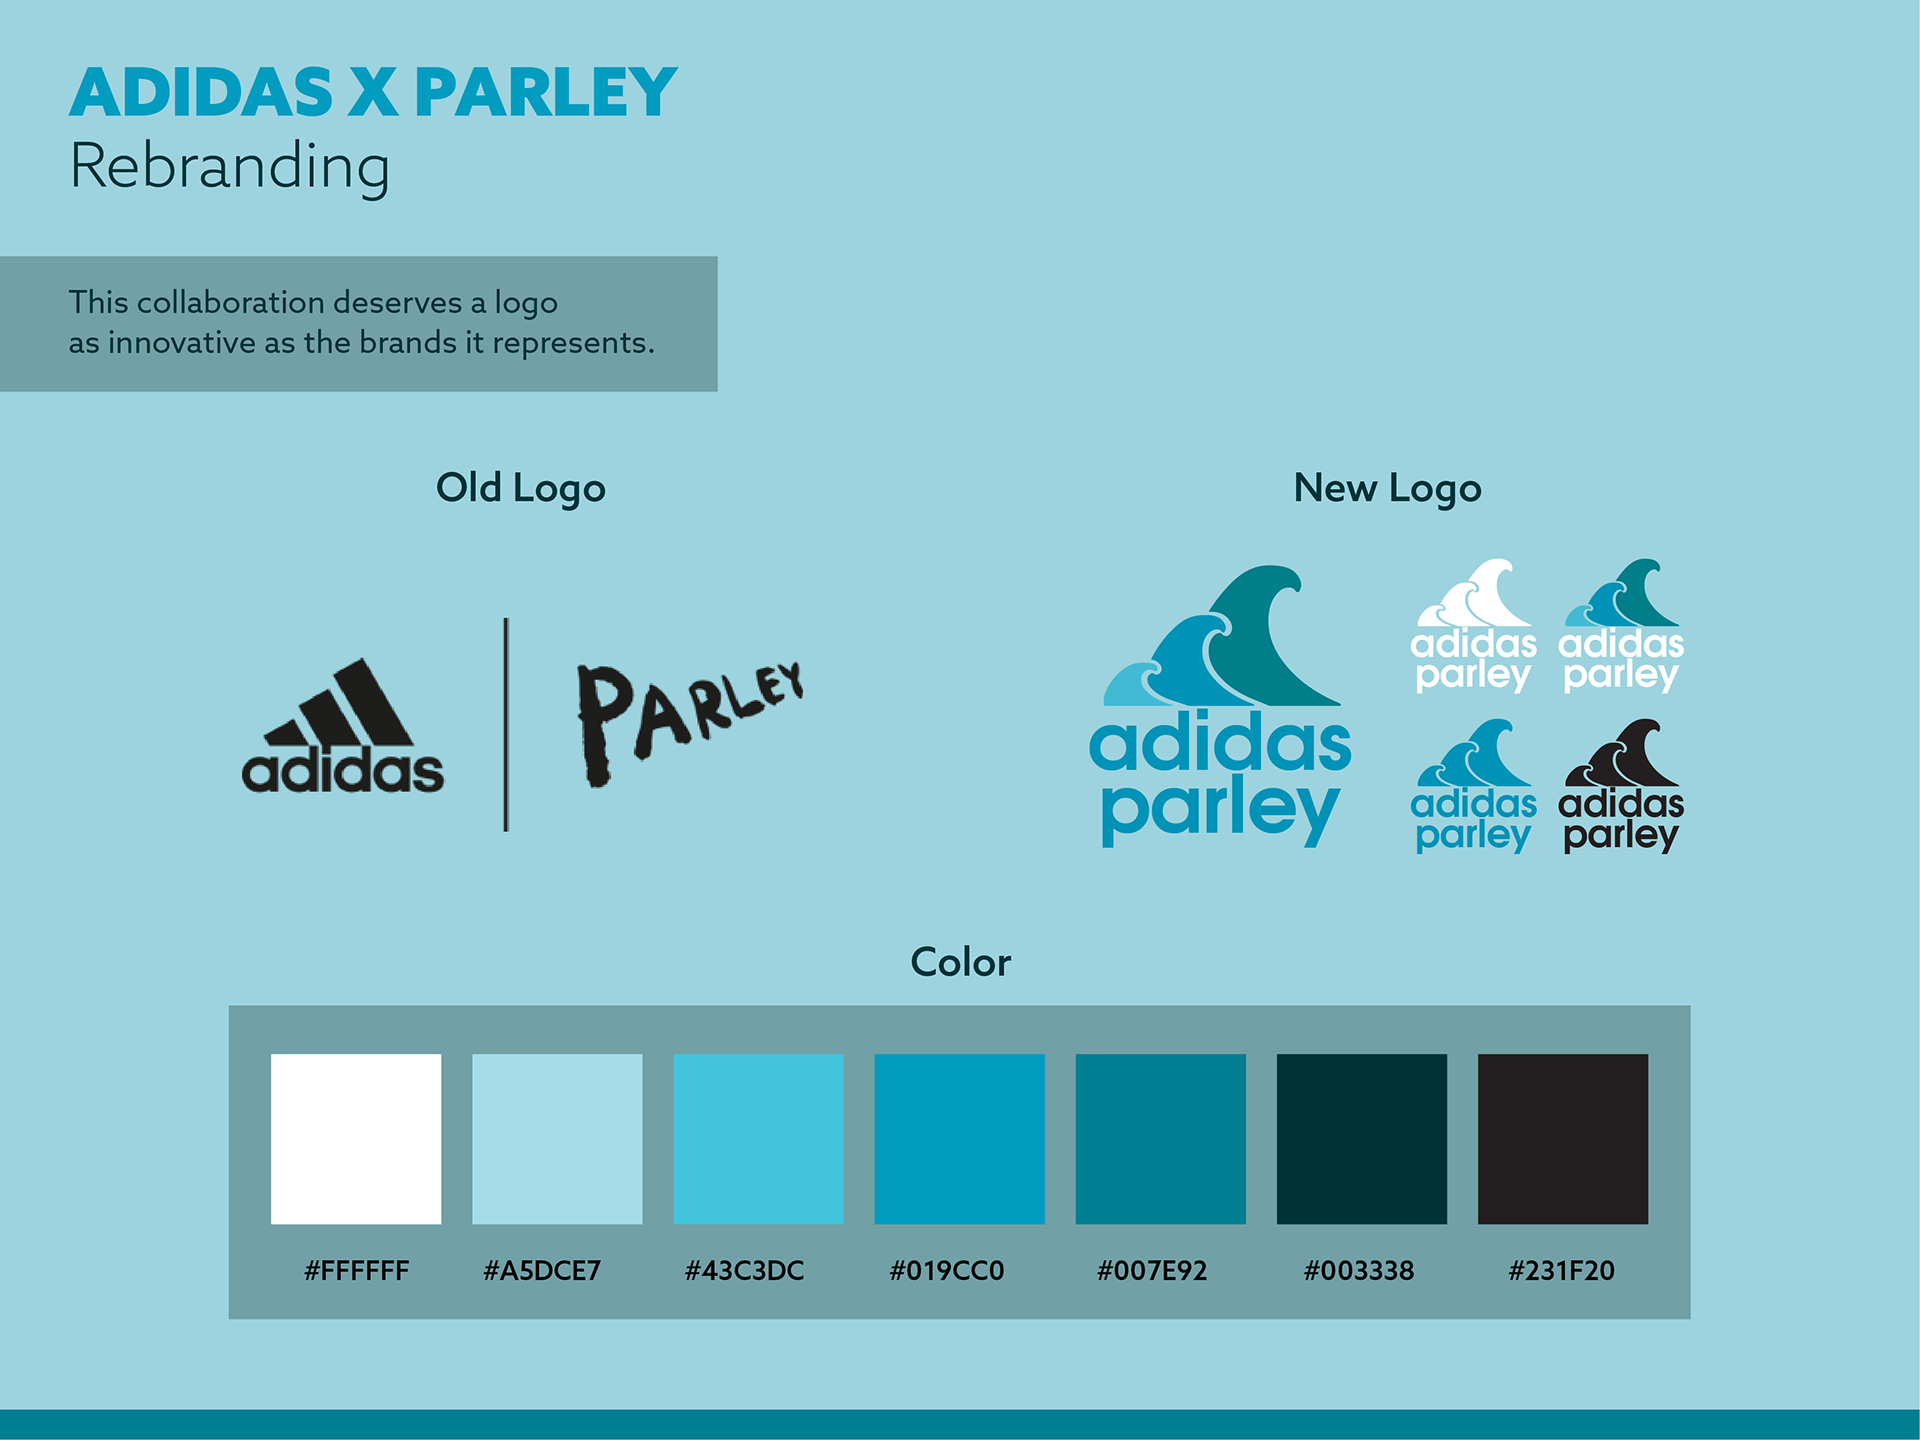 Farquharson - Adidas x Parley